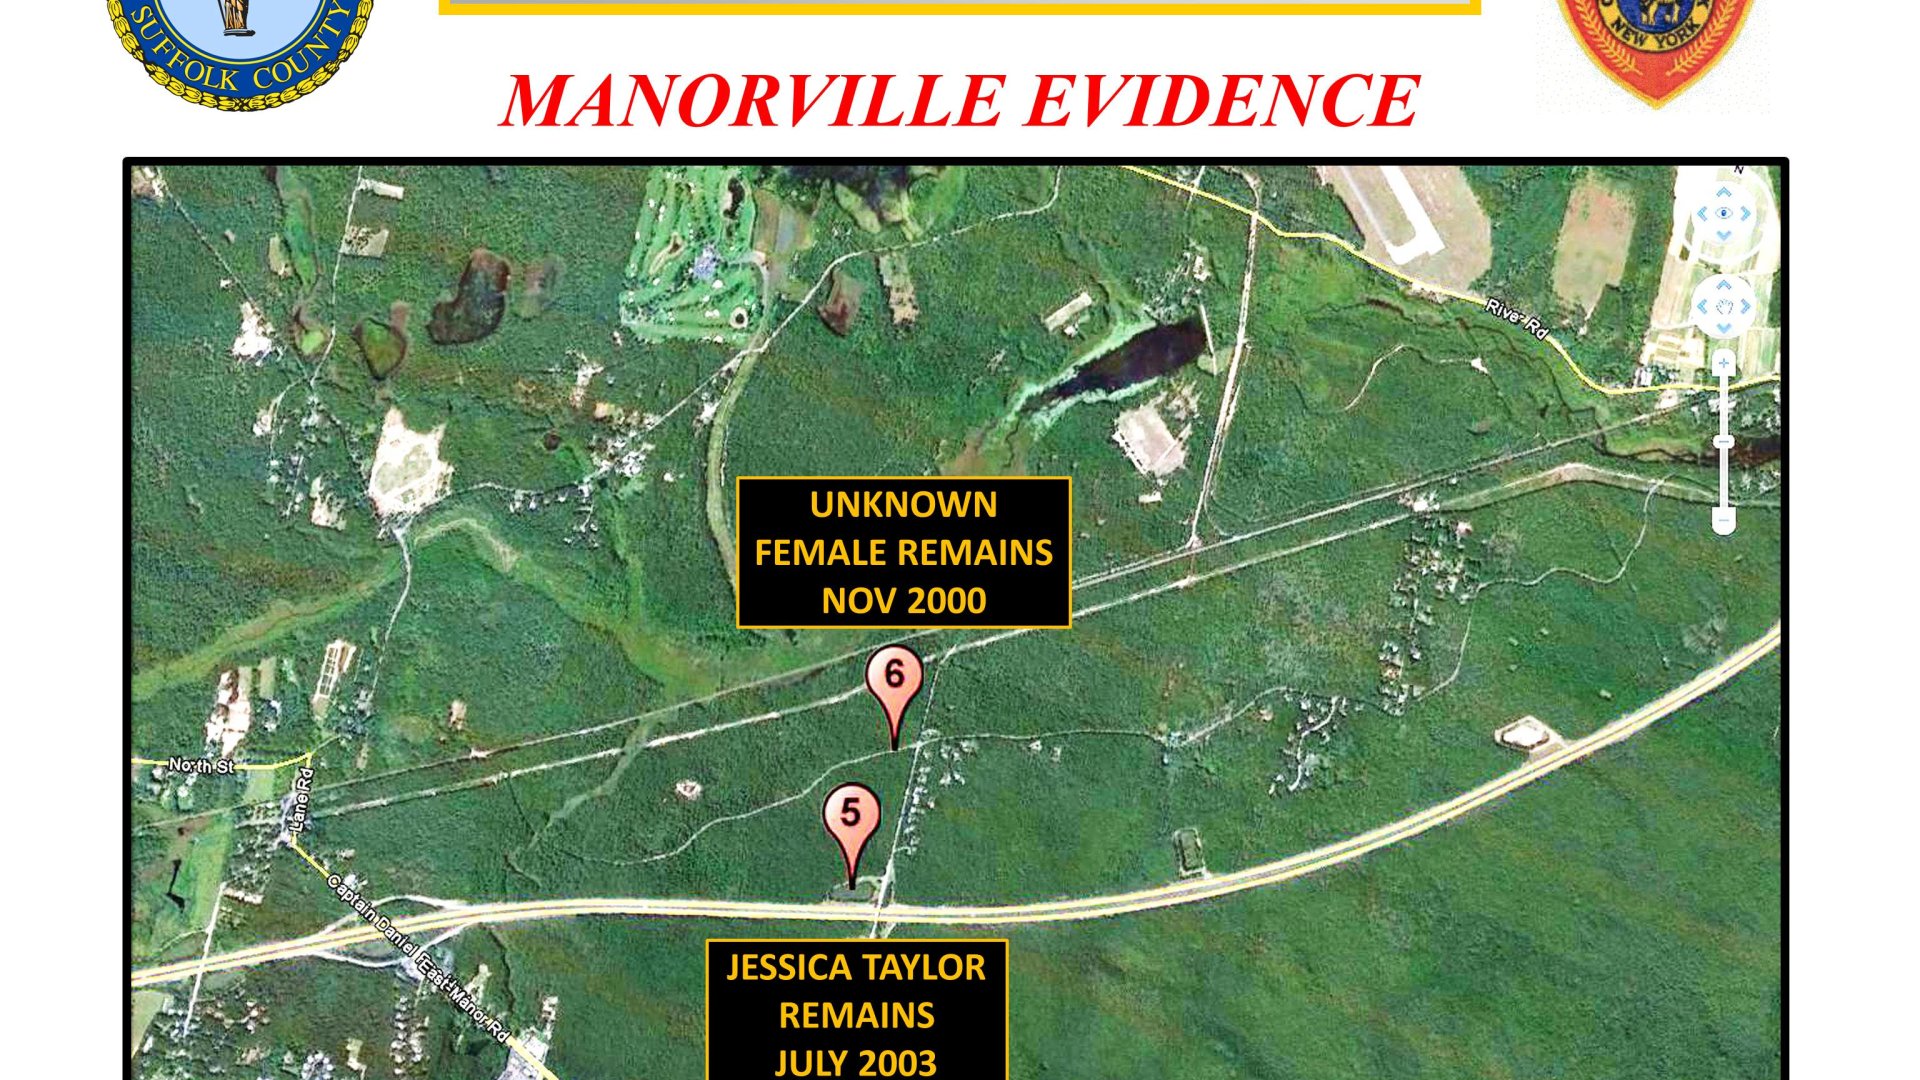 Manorville Evidence handout